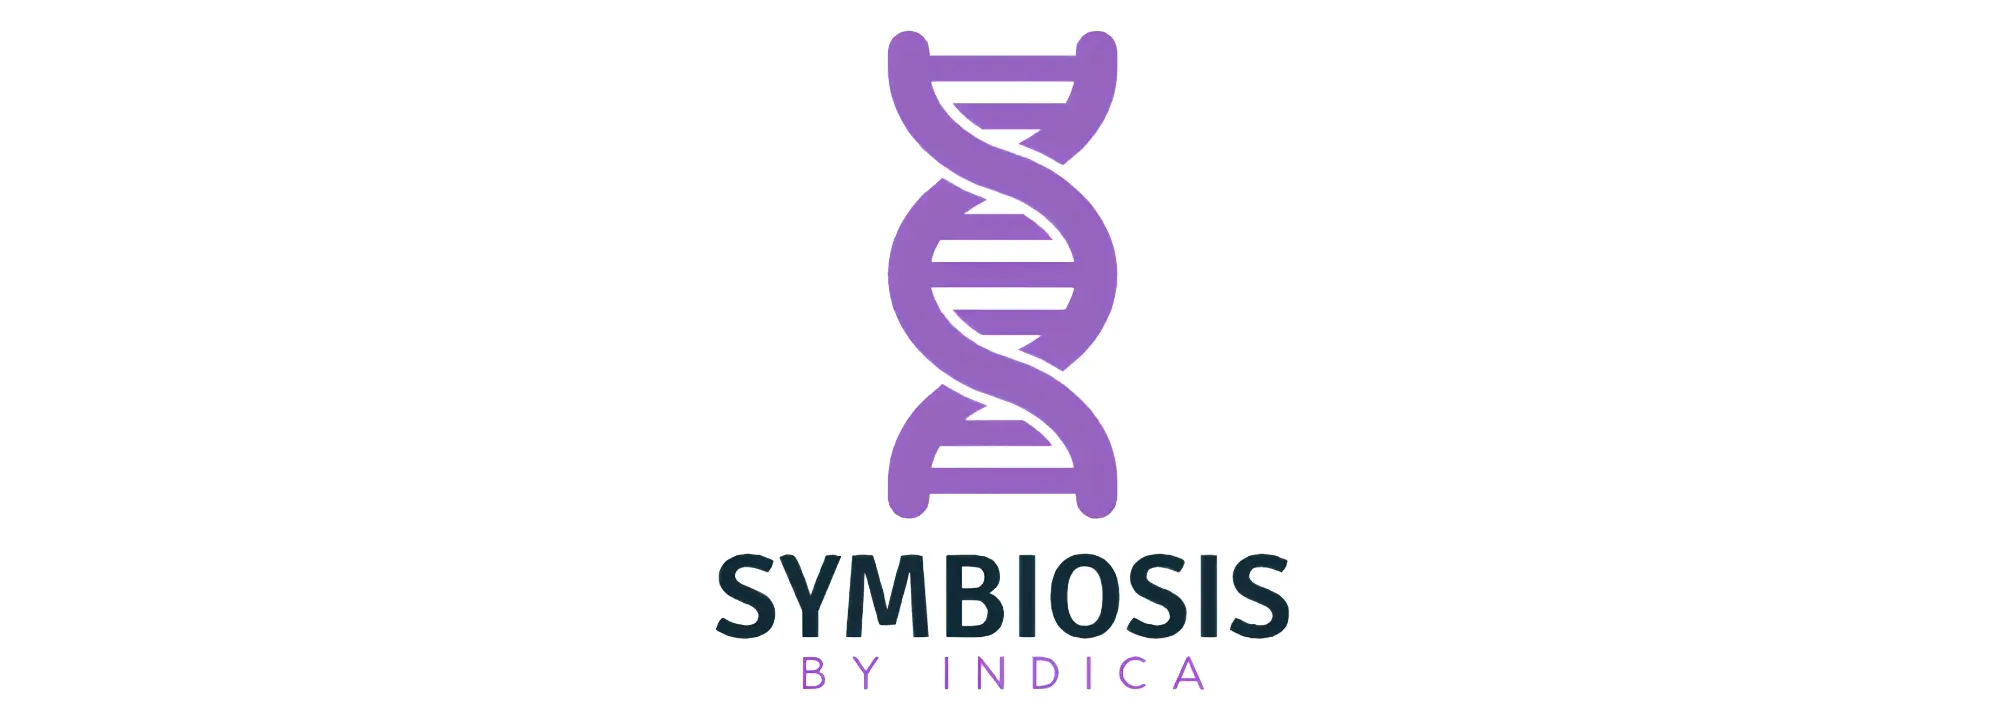 Symbiosis main image